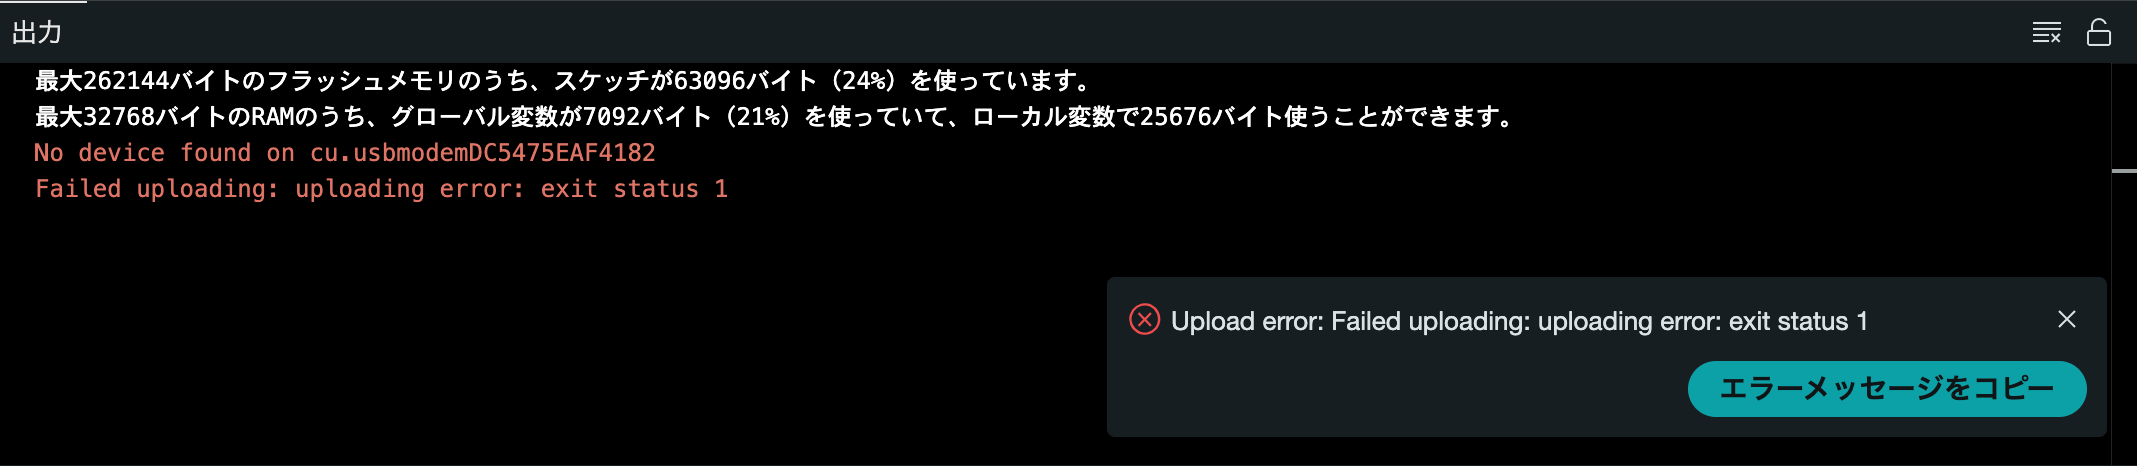 No device found on cu.usbmodem... Failed uploading: uploading error: exit status 1